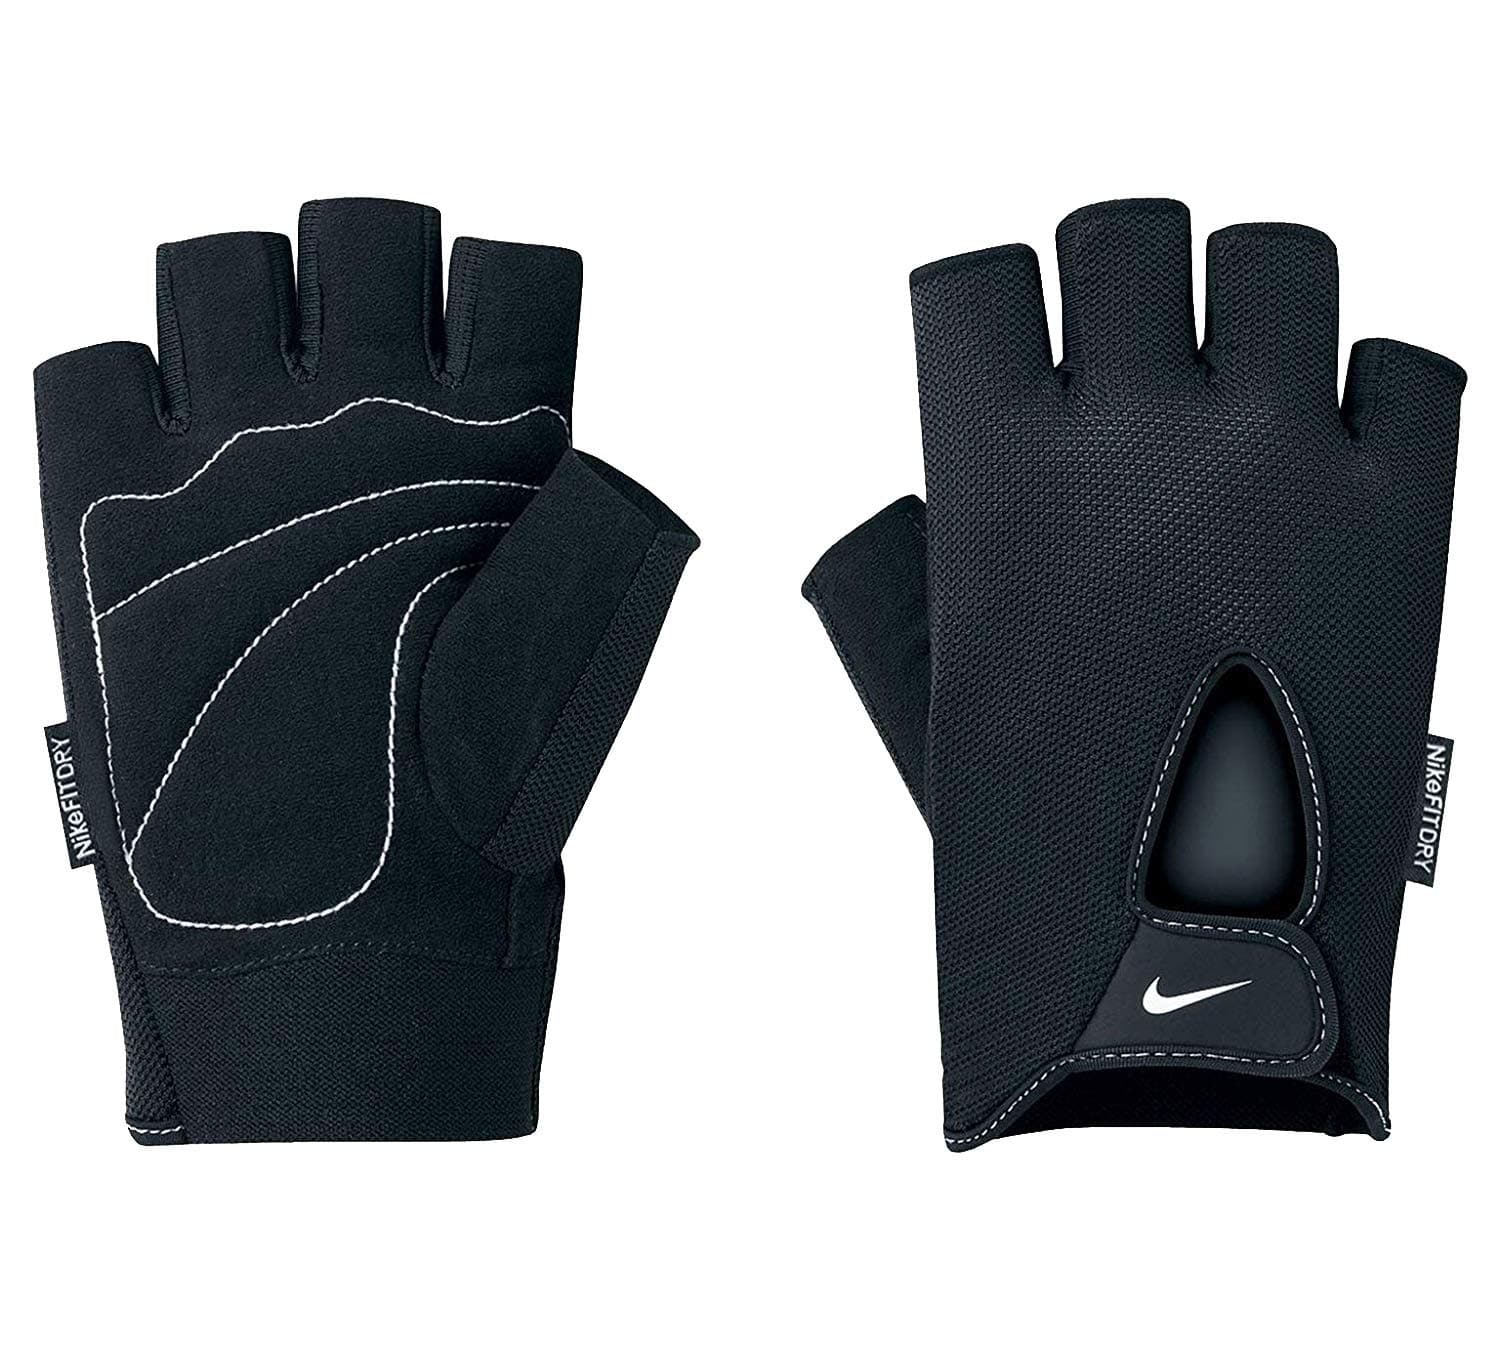 CLEARANCE: Nike Men's Fundamental Training Gloves